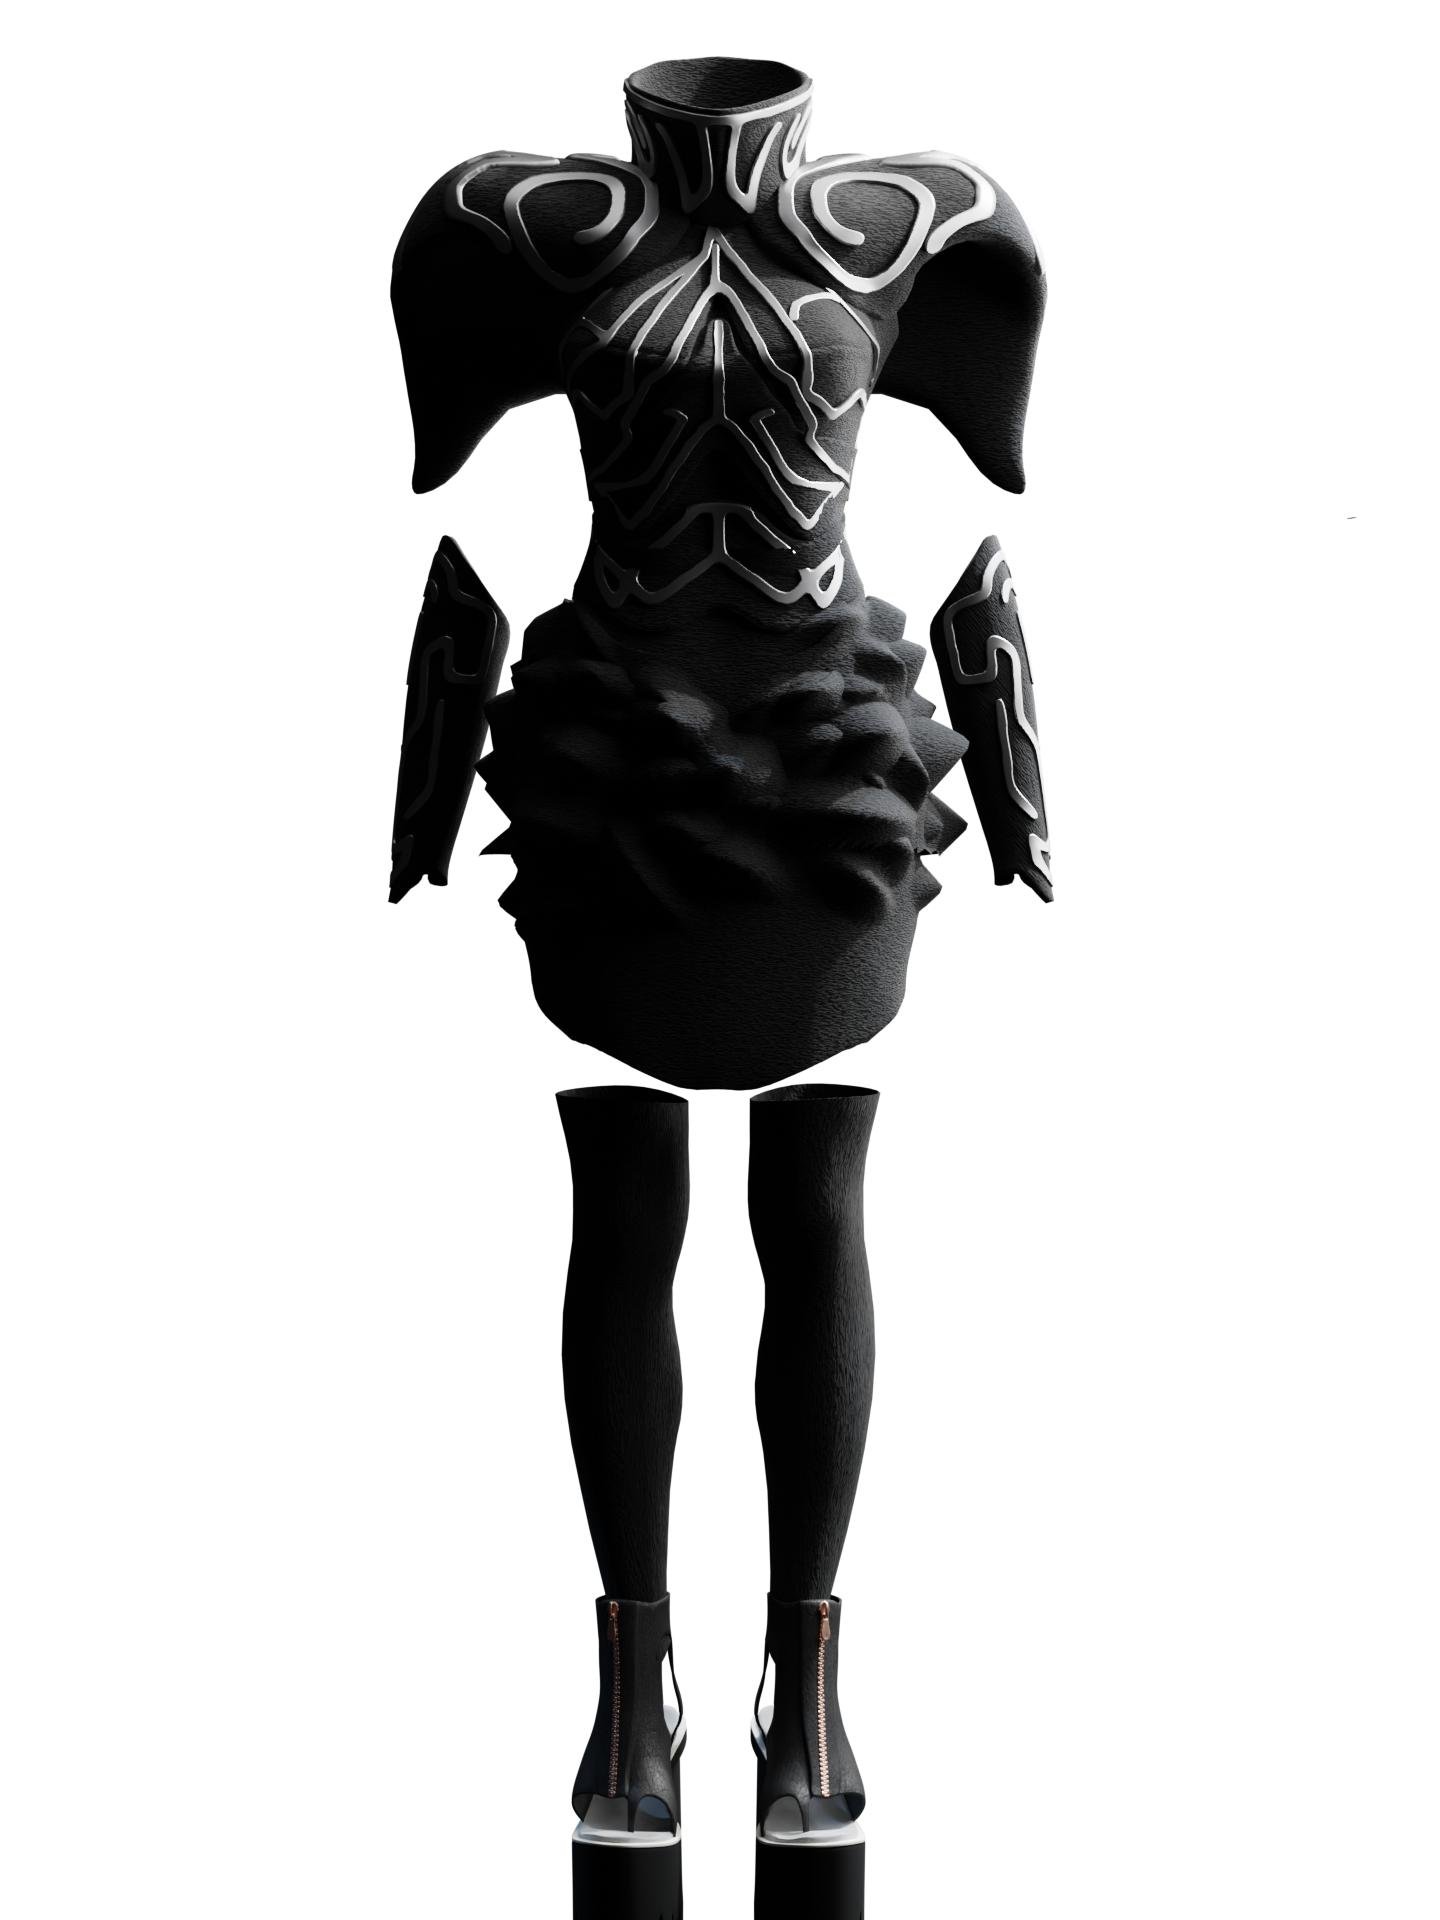 Black Galaxia Futuristic Suit by JOPITER STUDIOS